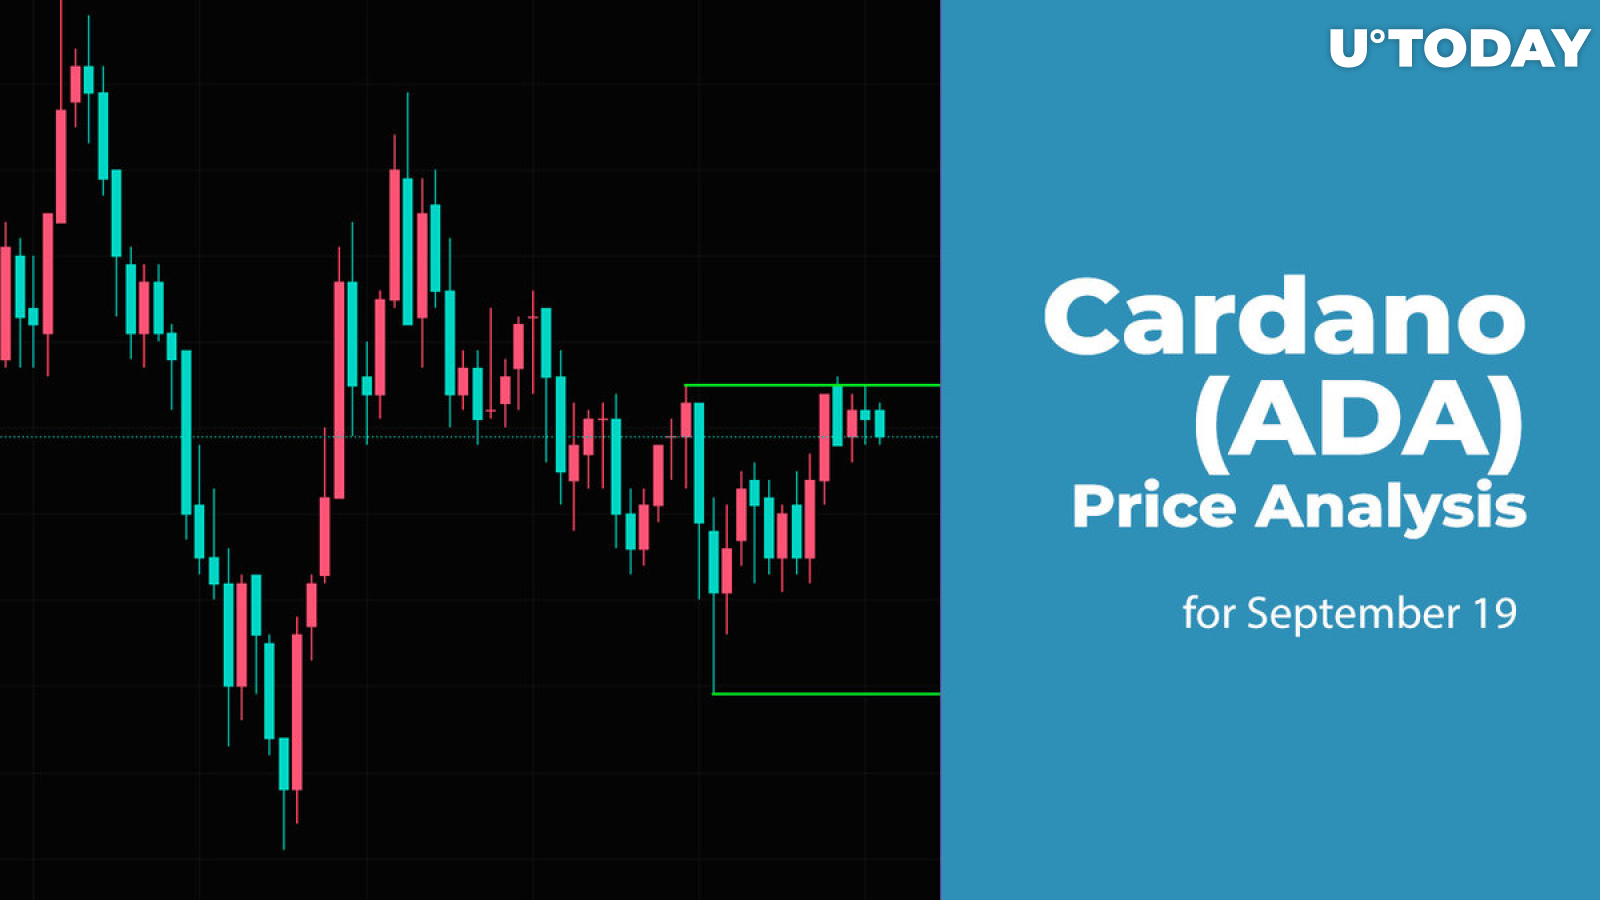 Cardano (ADA) Price Analysis for September 19